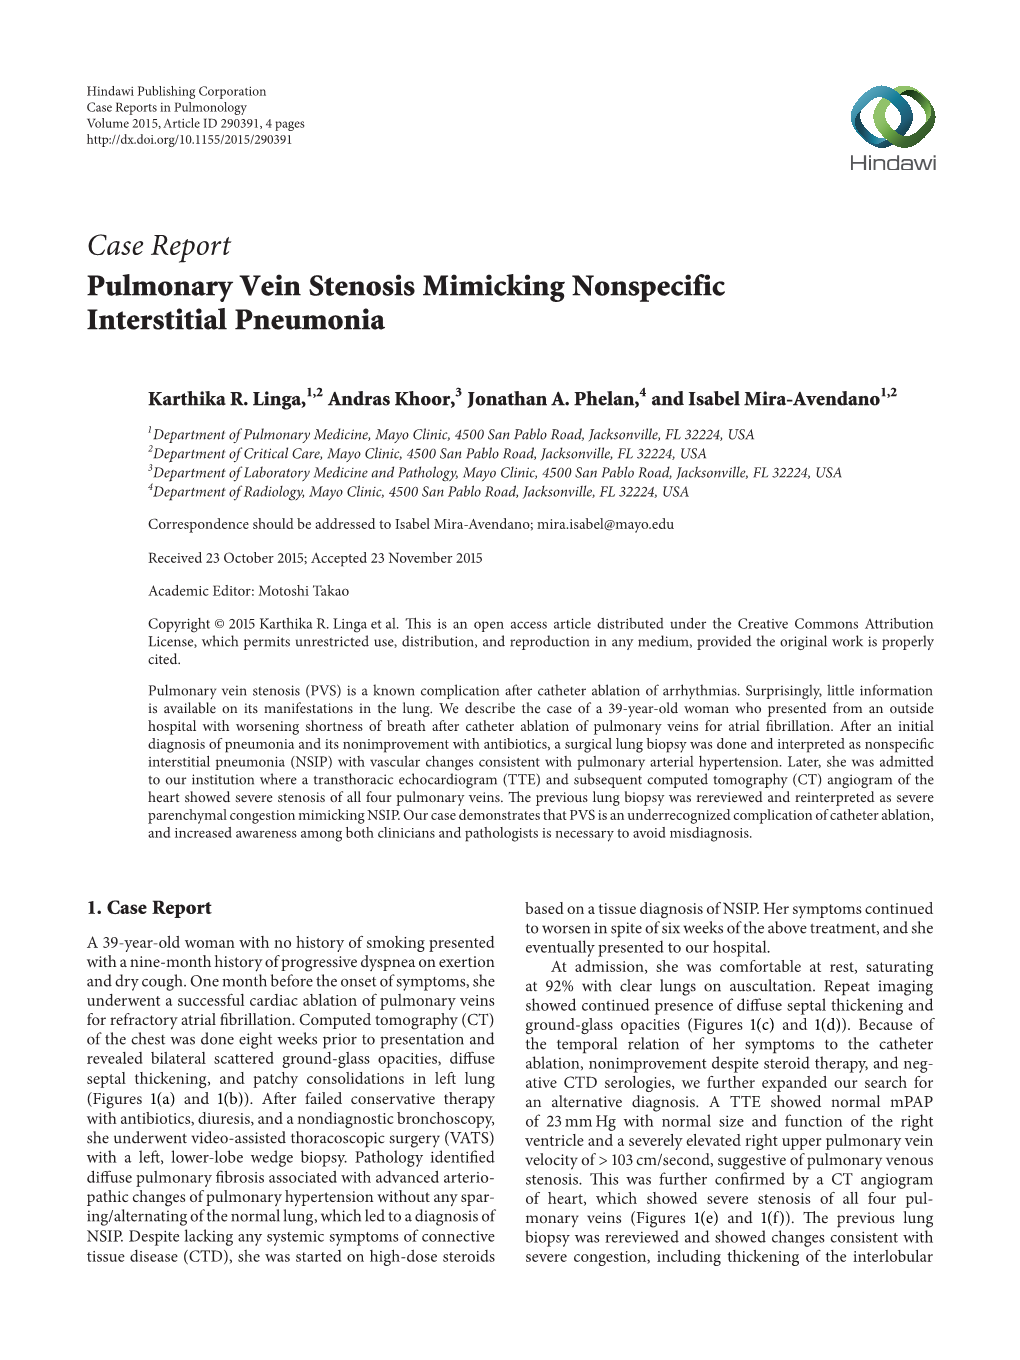 Pulmonary Vein Stenosis Mimicking Nonspecific Interstitial Pneumonia